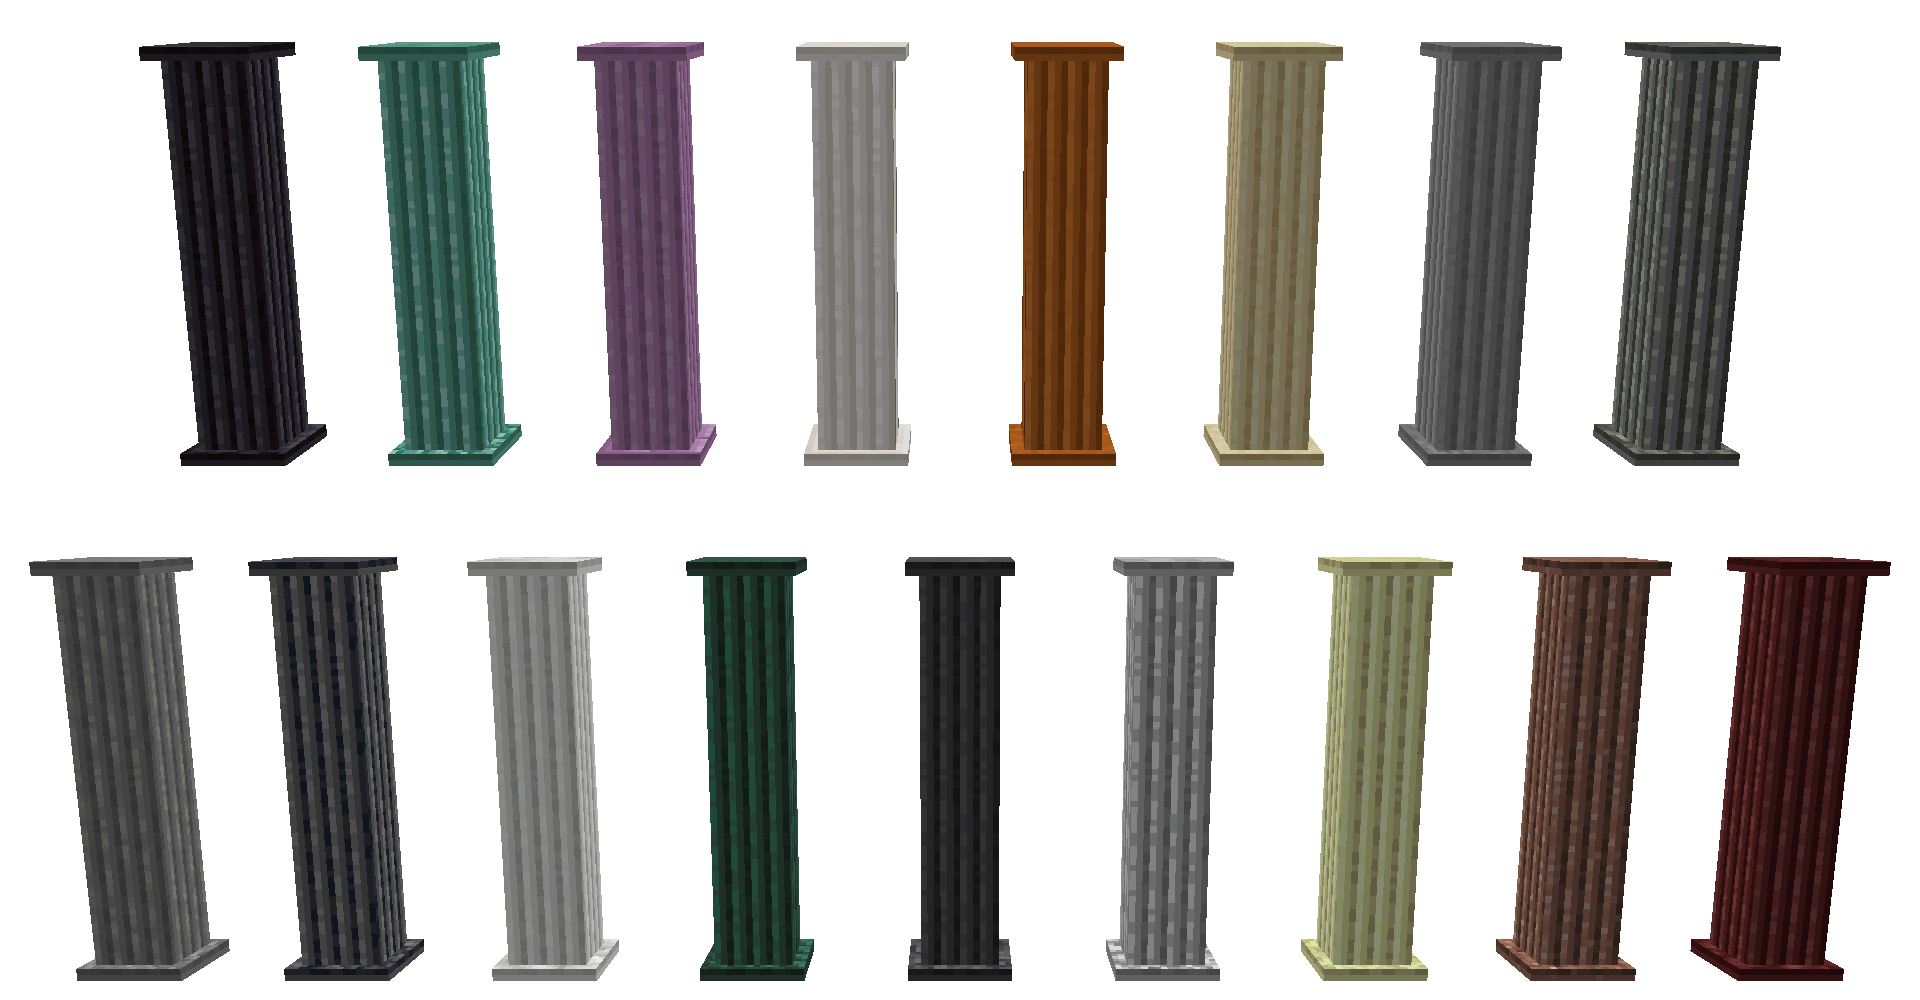 Image of all the pillar blocks